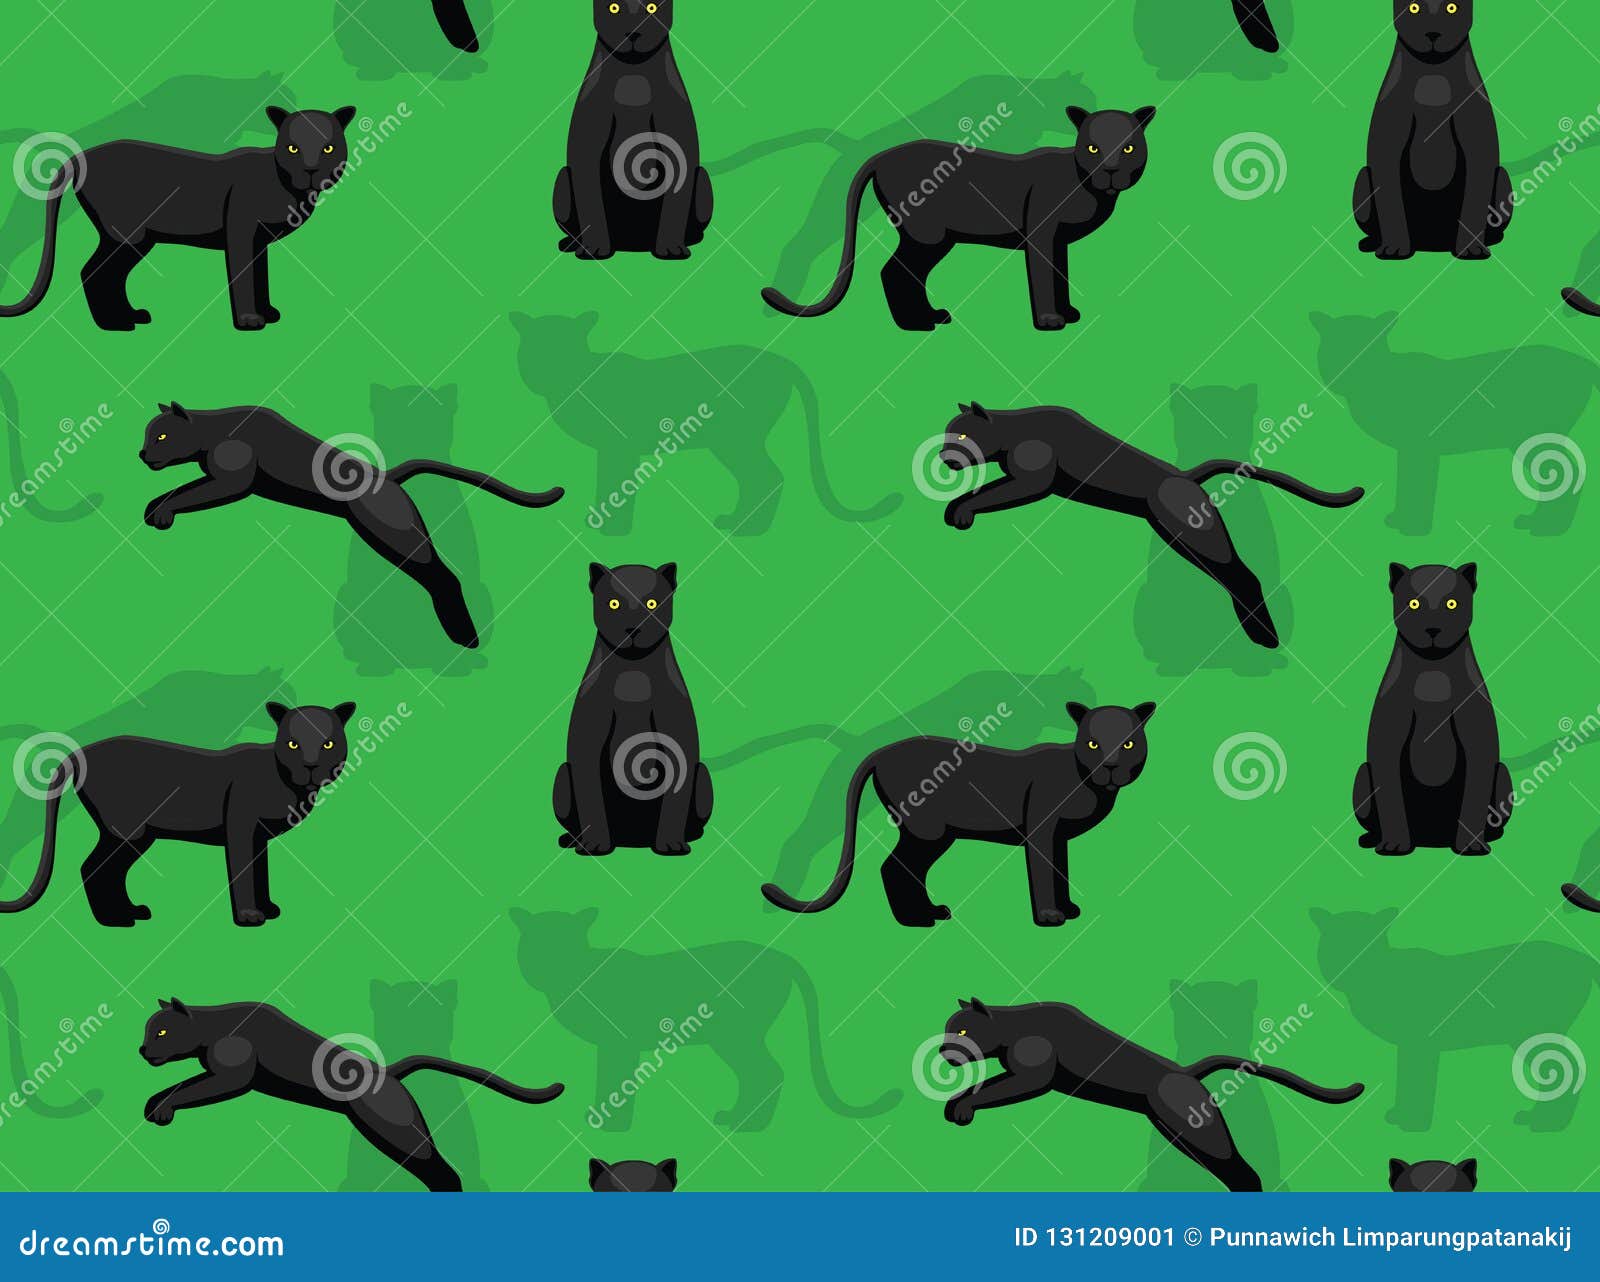 Black Panther Jumping Cartoon Background Seamless Wallpaper Stock Vector -  Illustration of leopard, endangered: 131209001